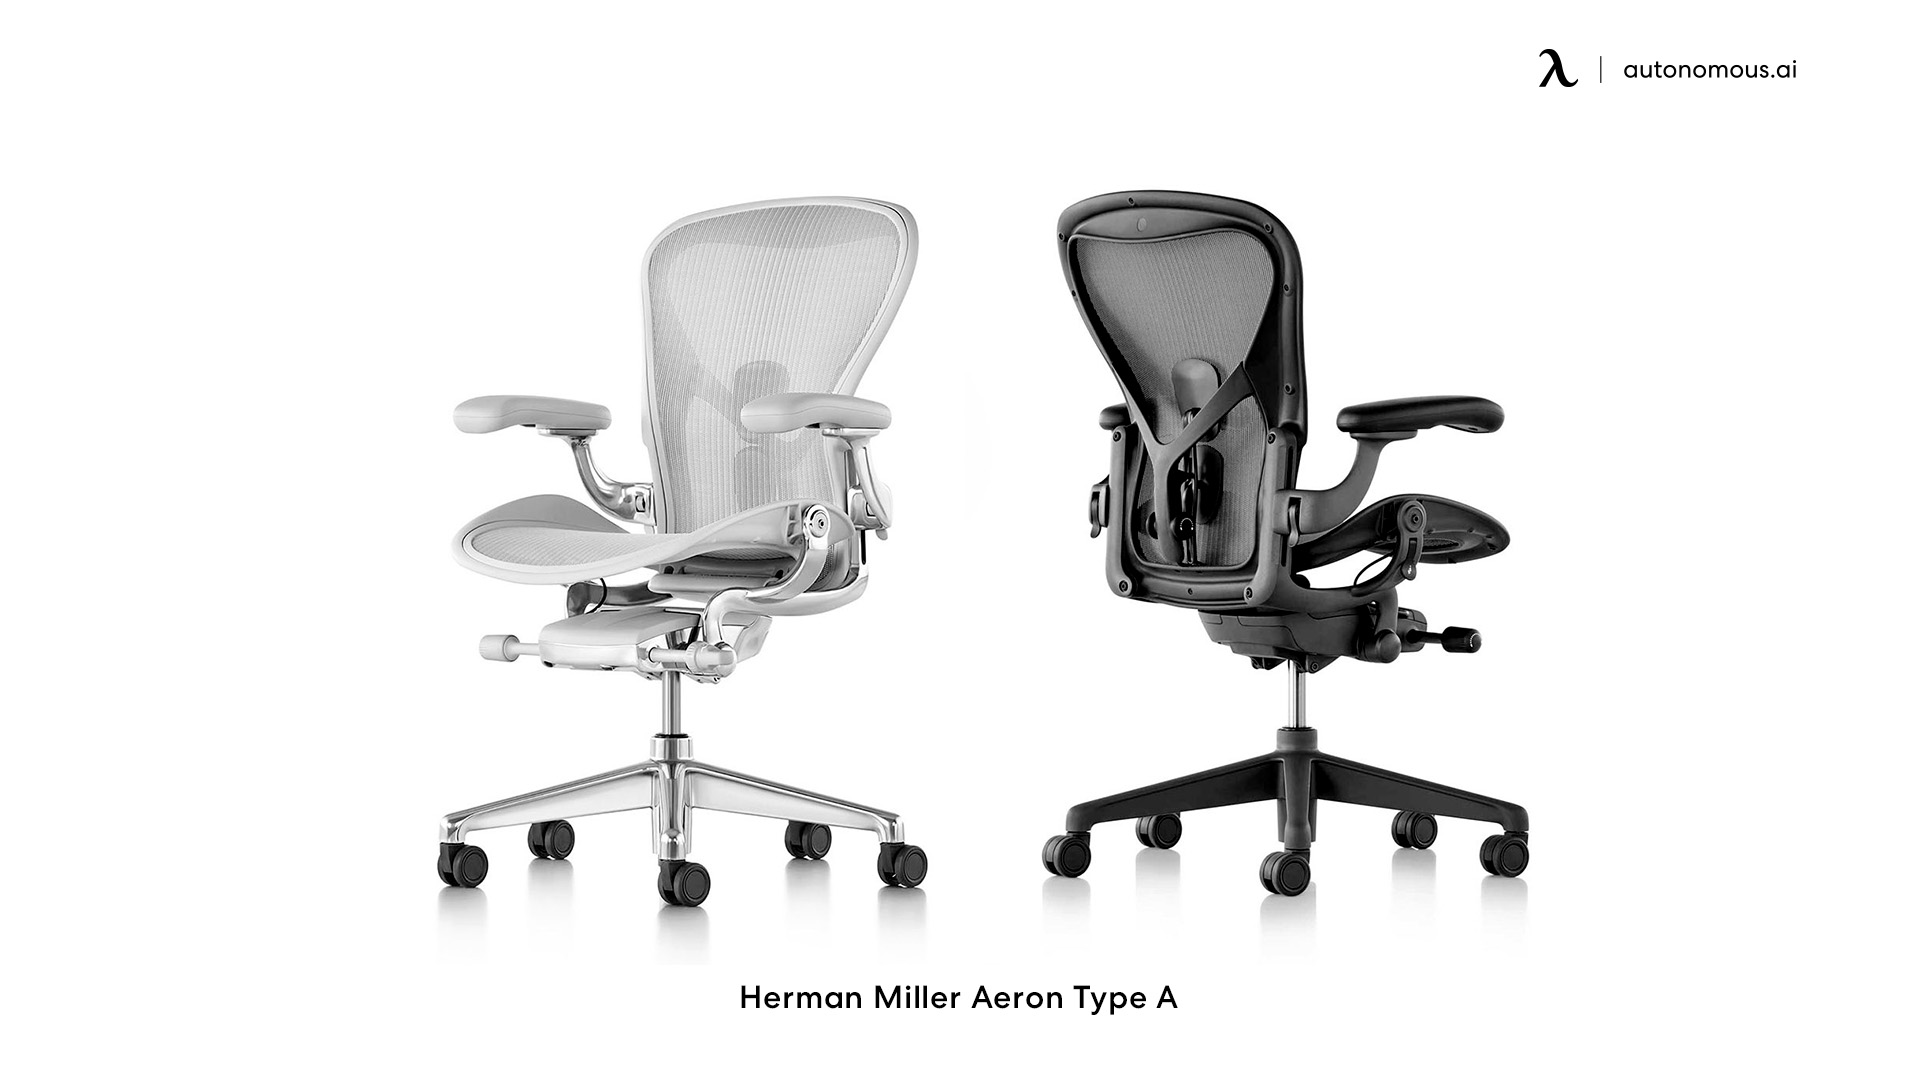 Herman Miller is among the best ergonomic chair developers next to Autonomous.